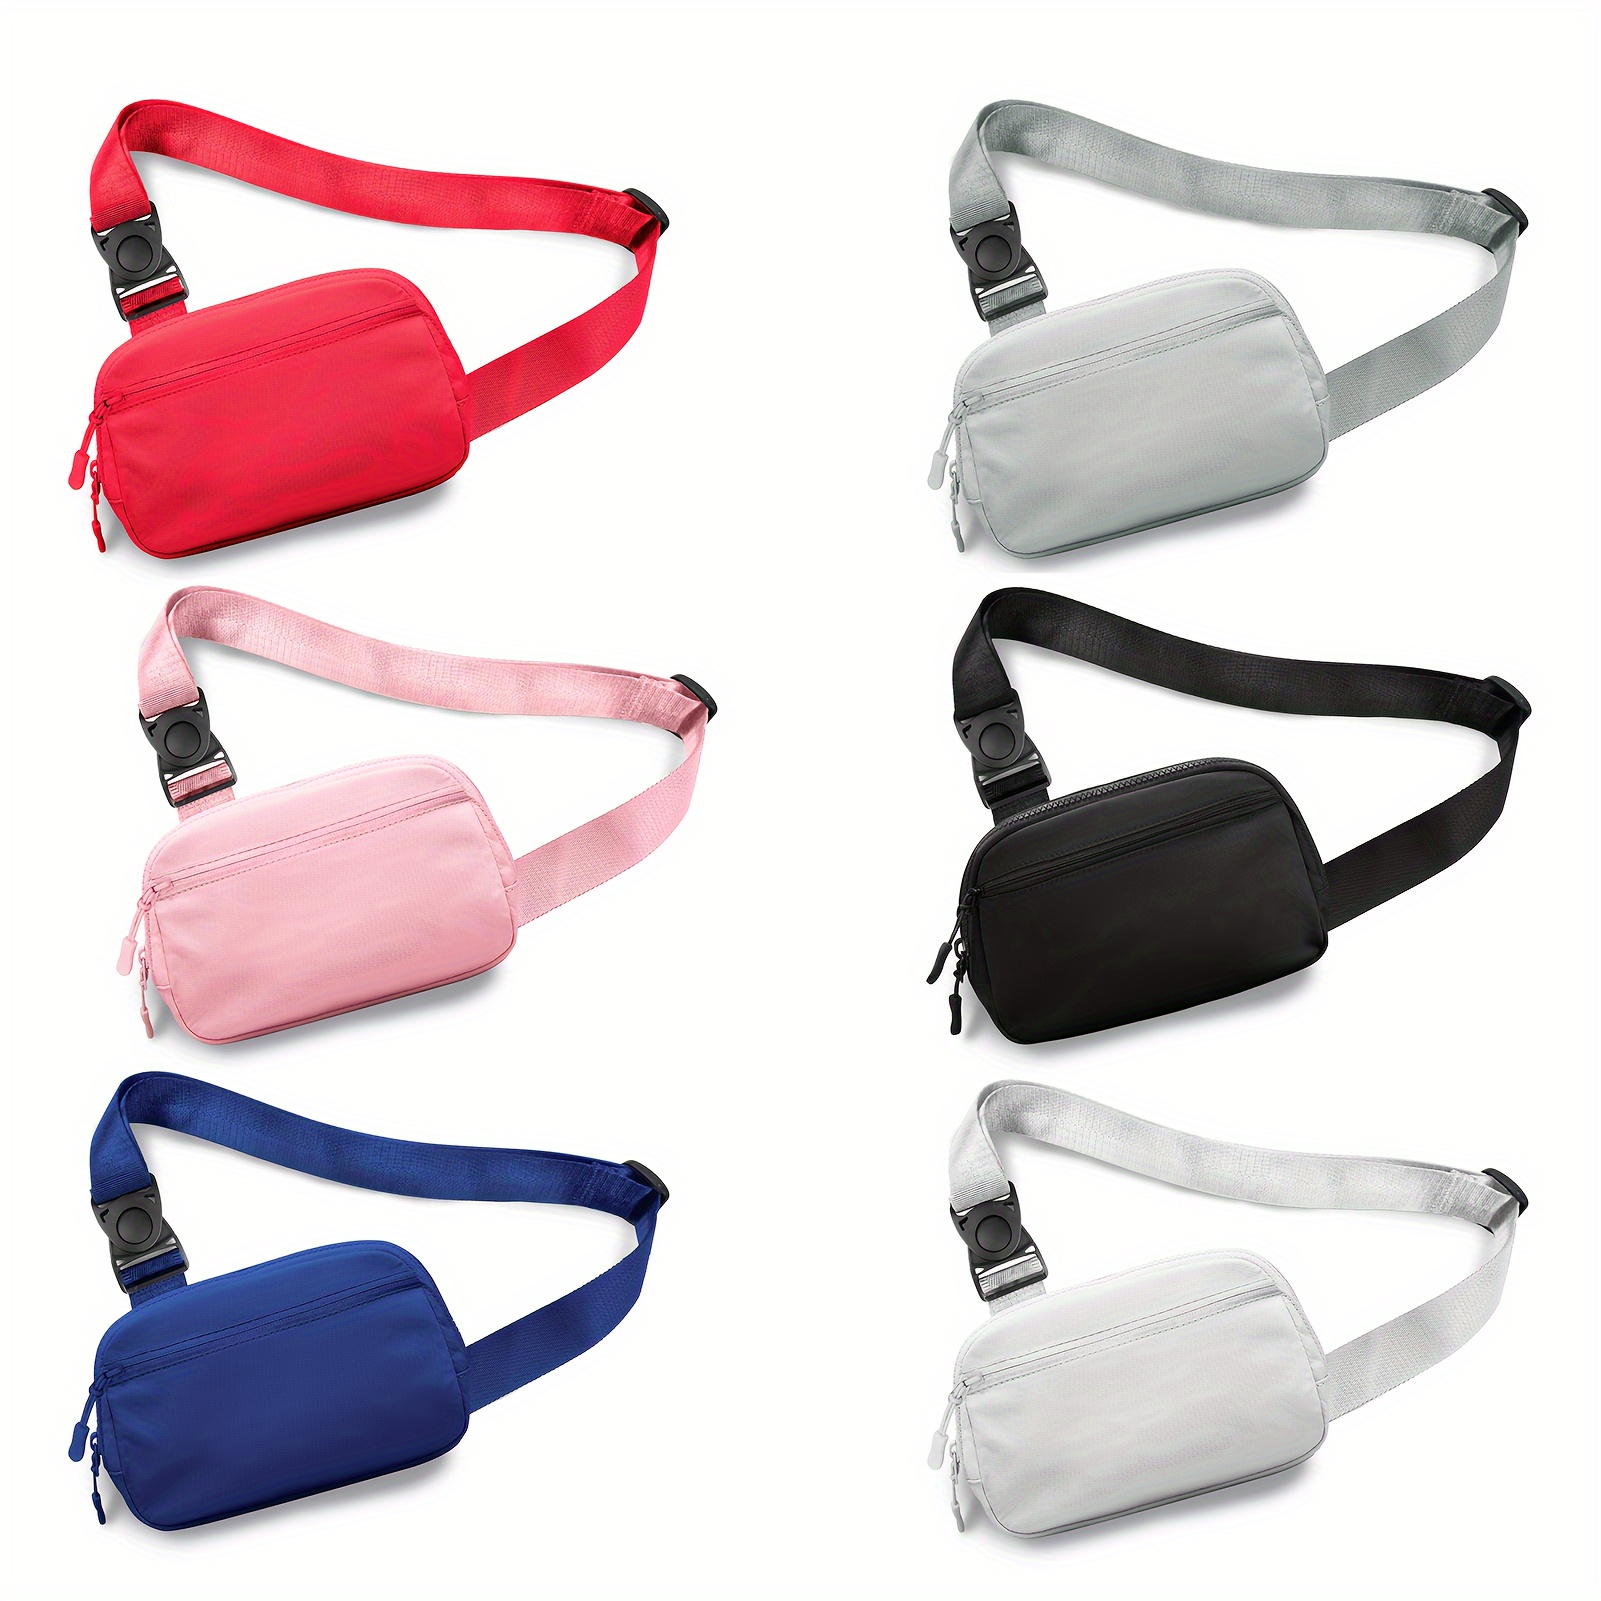 

Mini Crossbody Bag With Adjustable Shoulder Strap 1l Small Belt Bag For Fitness, Running, Traveling And Hiking Black